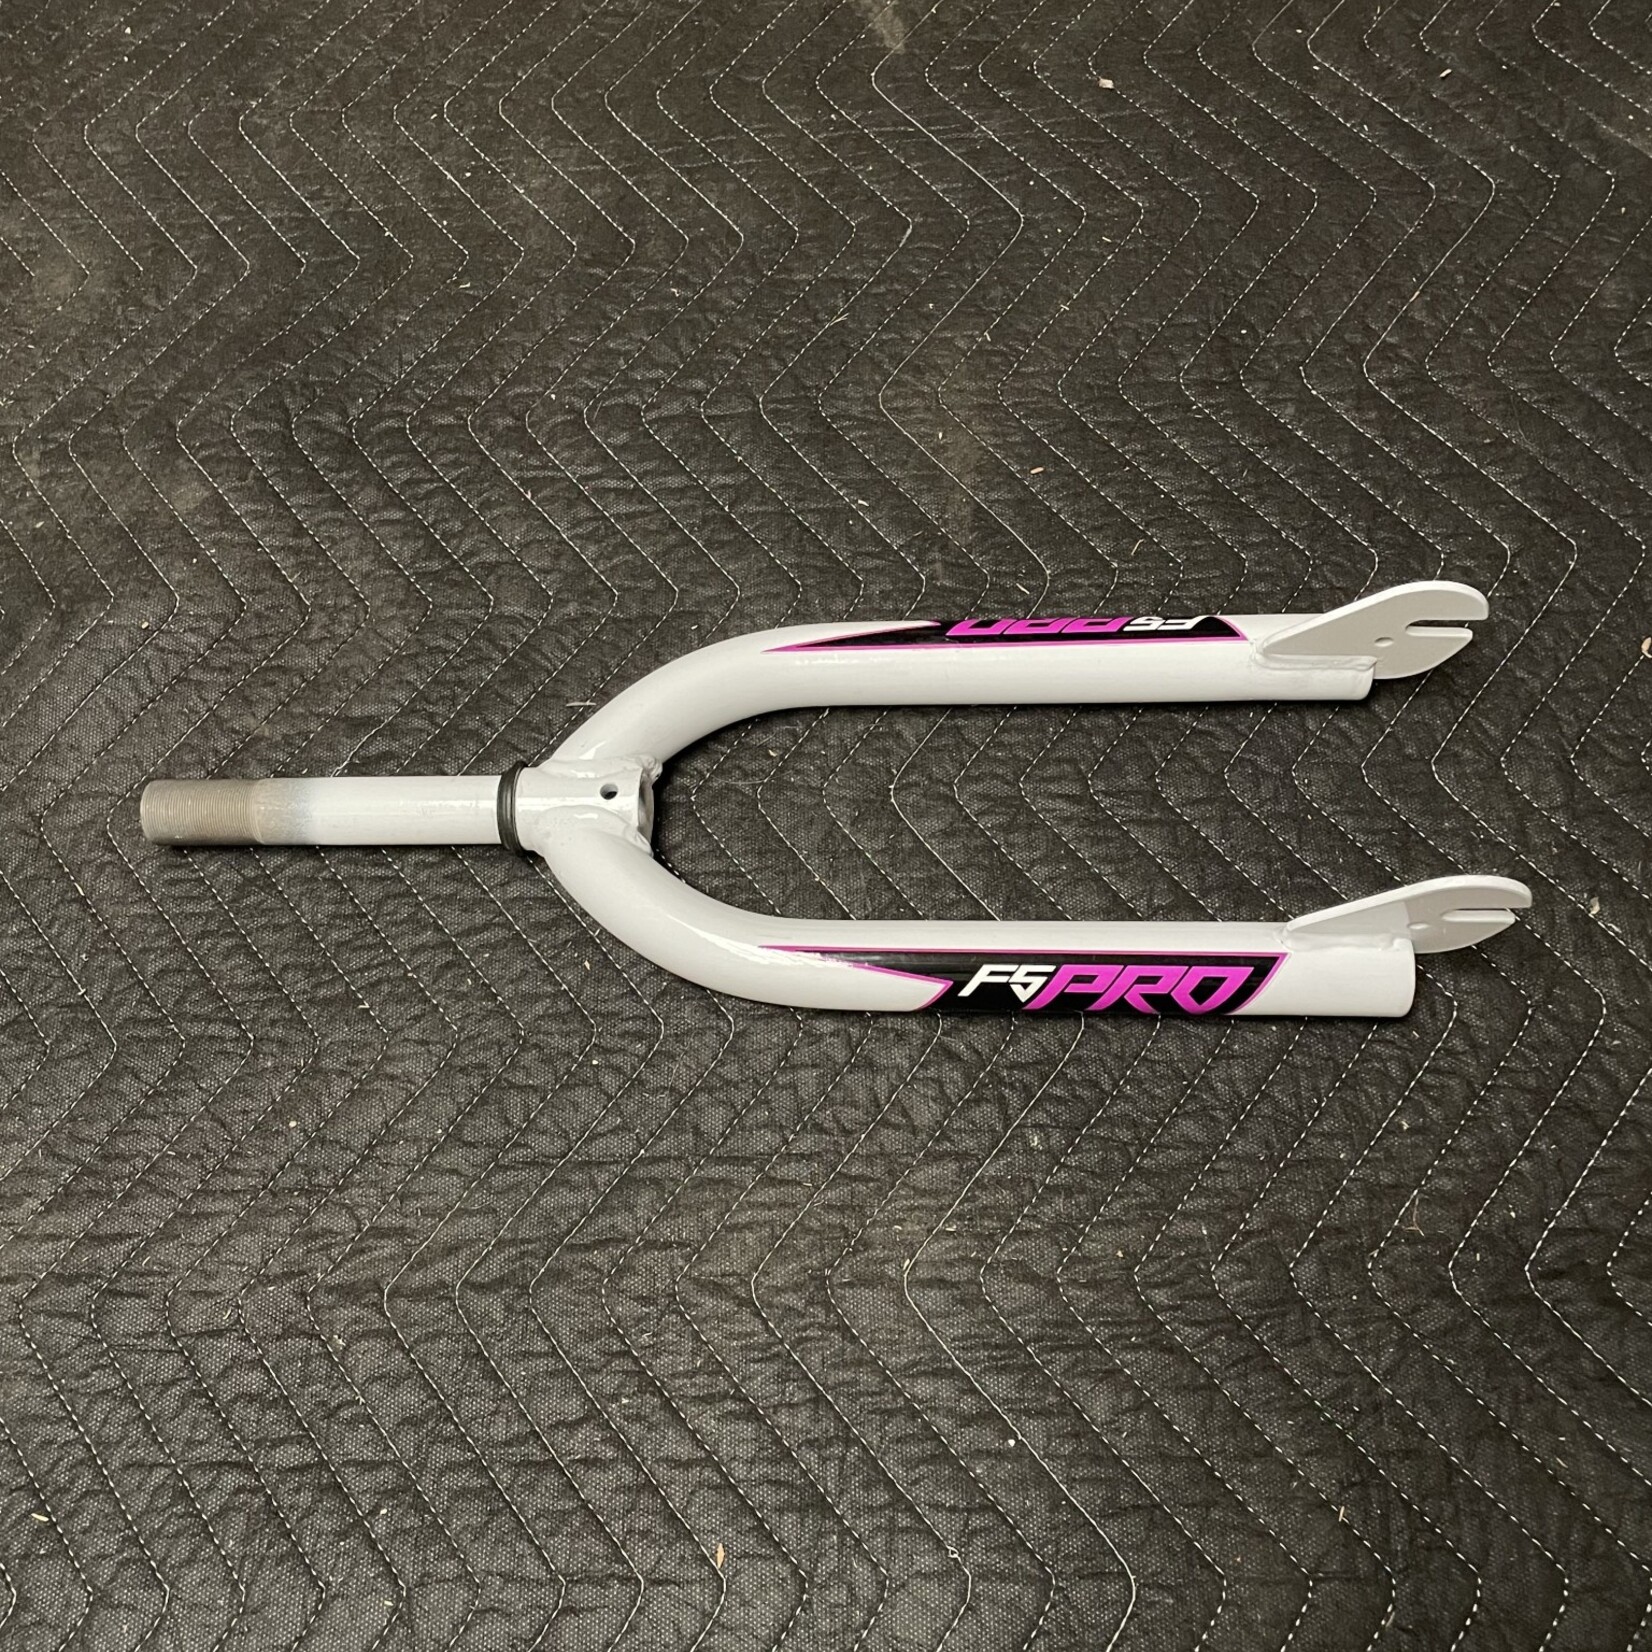 FSPro 1” x 5 1/2” Threaded 20" Bicycle Fork (White & Pinkish Purple)